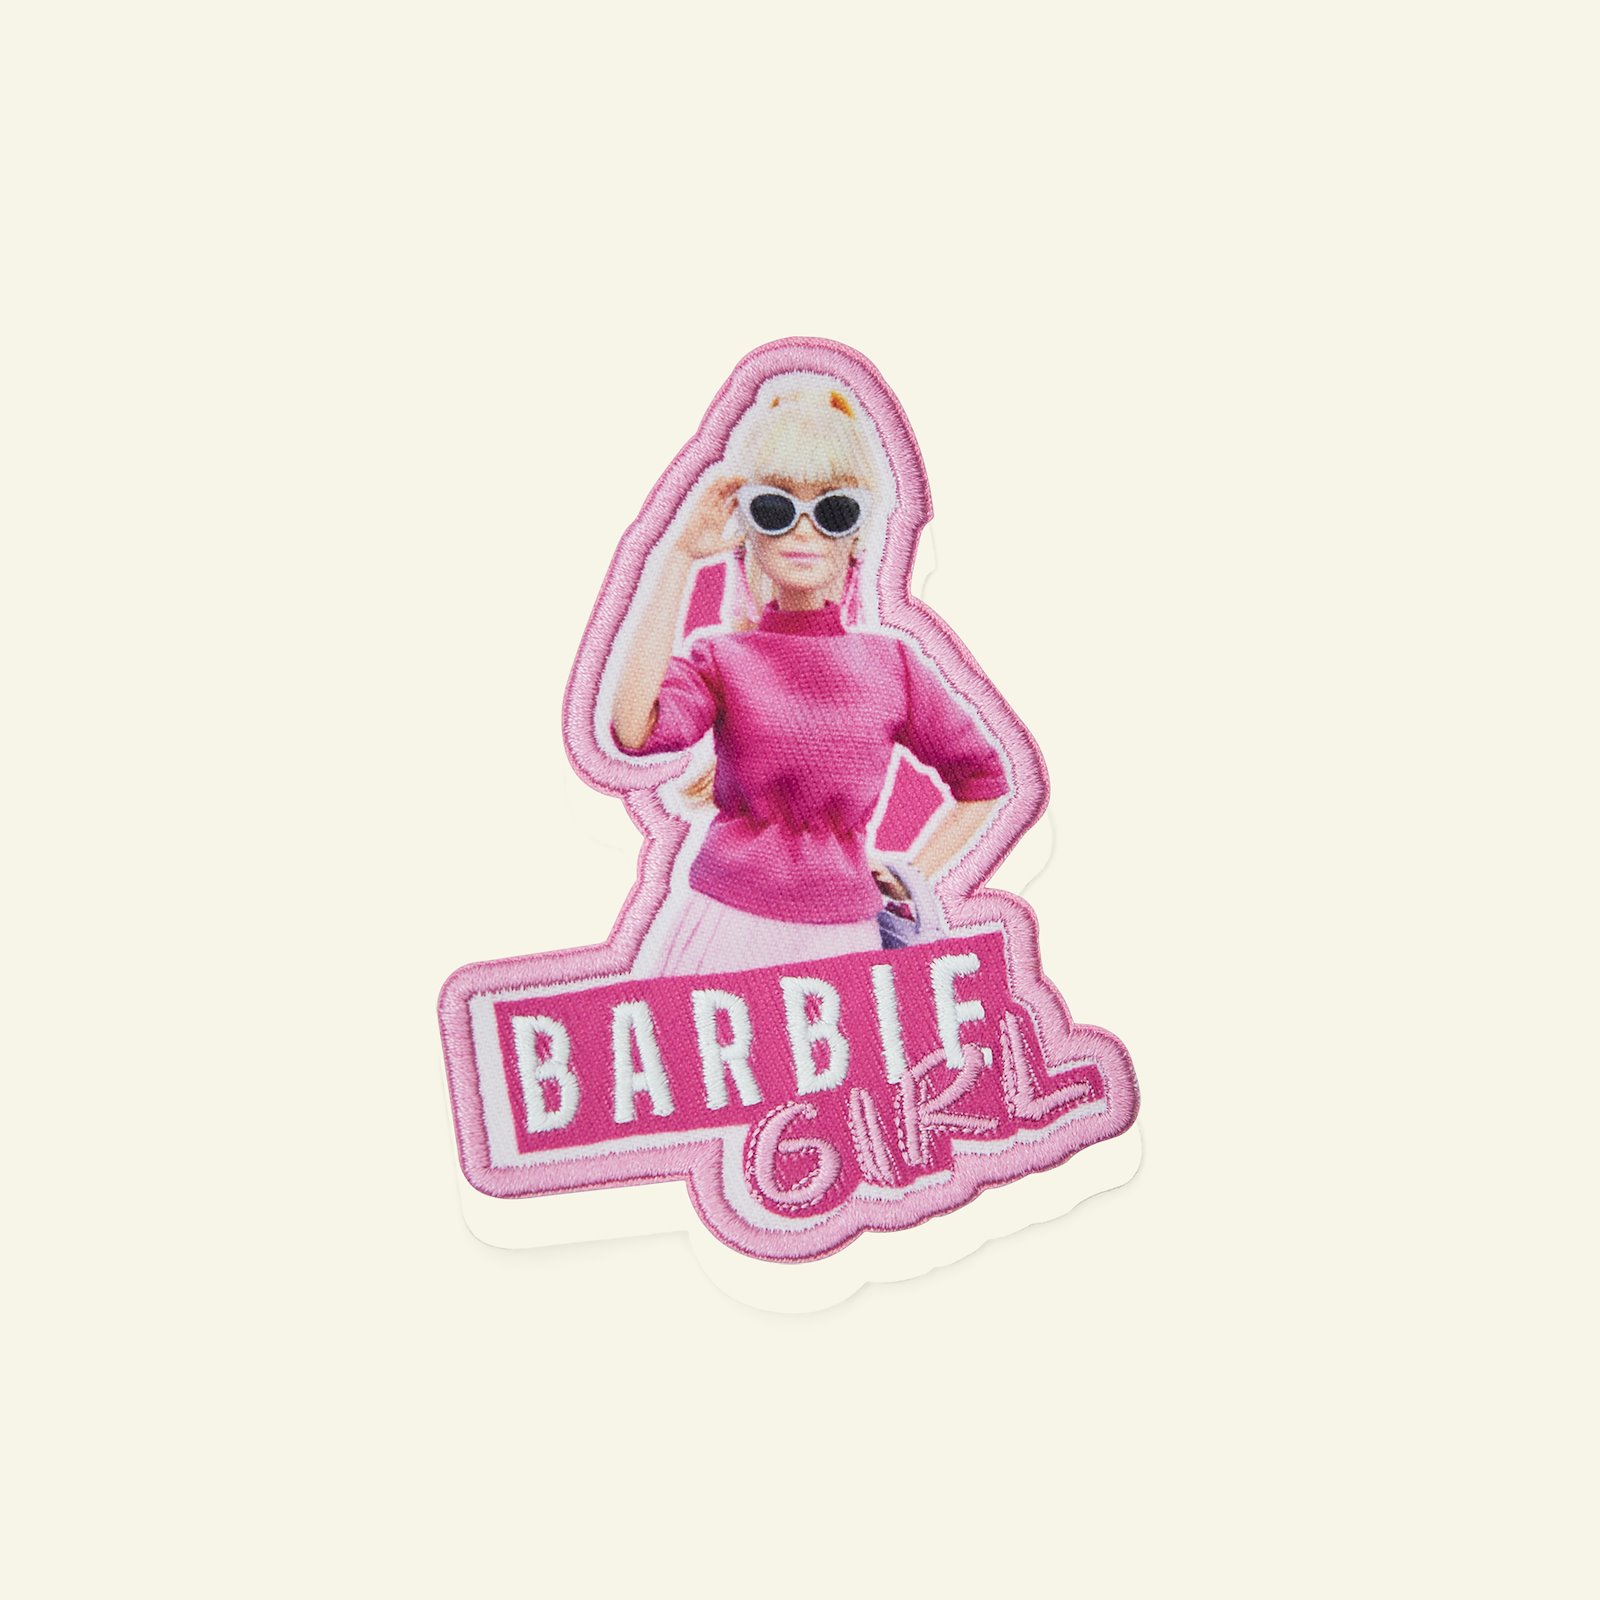 Symerke Barbie Girl 85x65mm 1stk 24990_pack